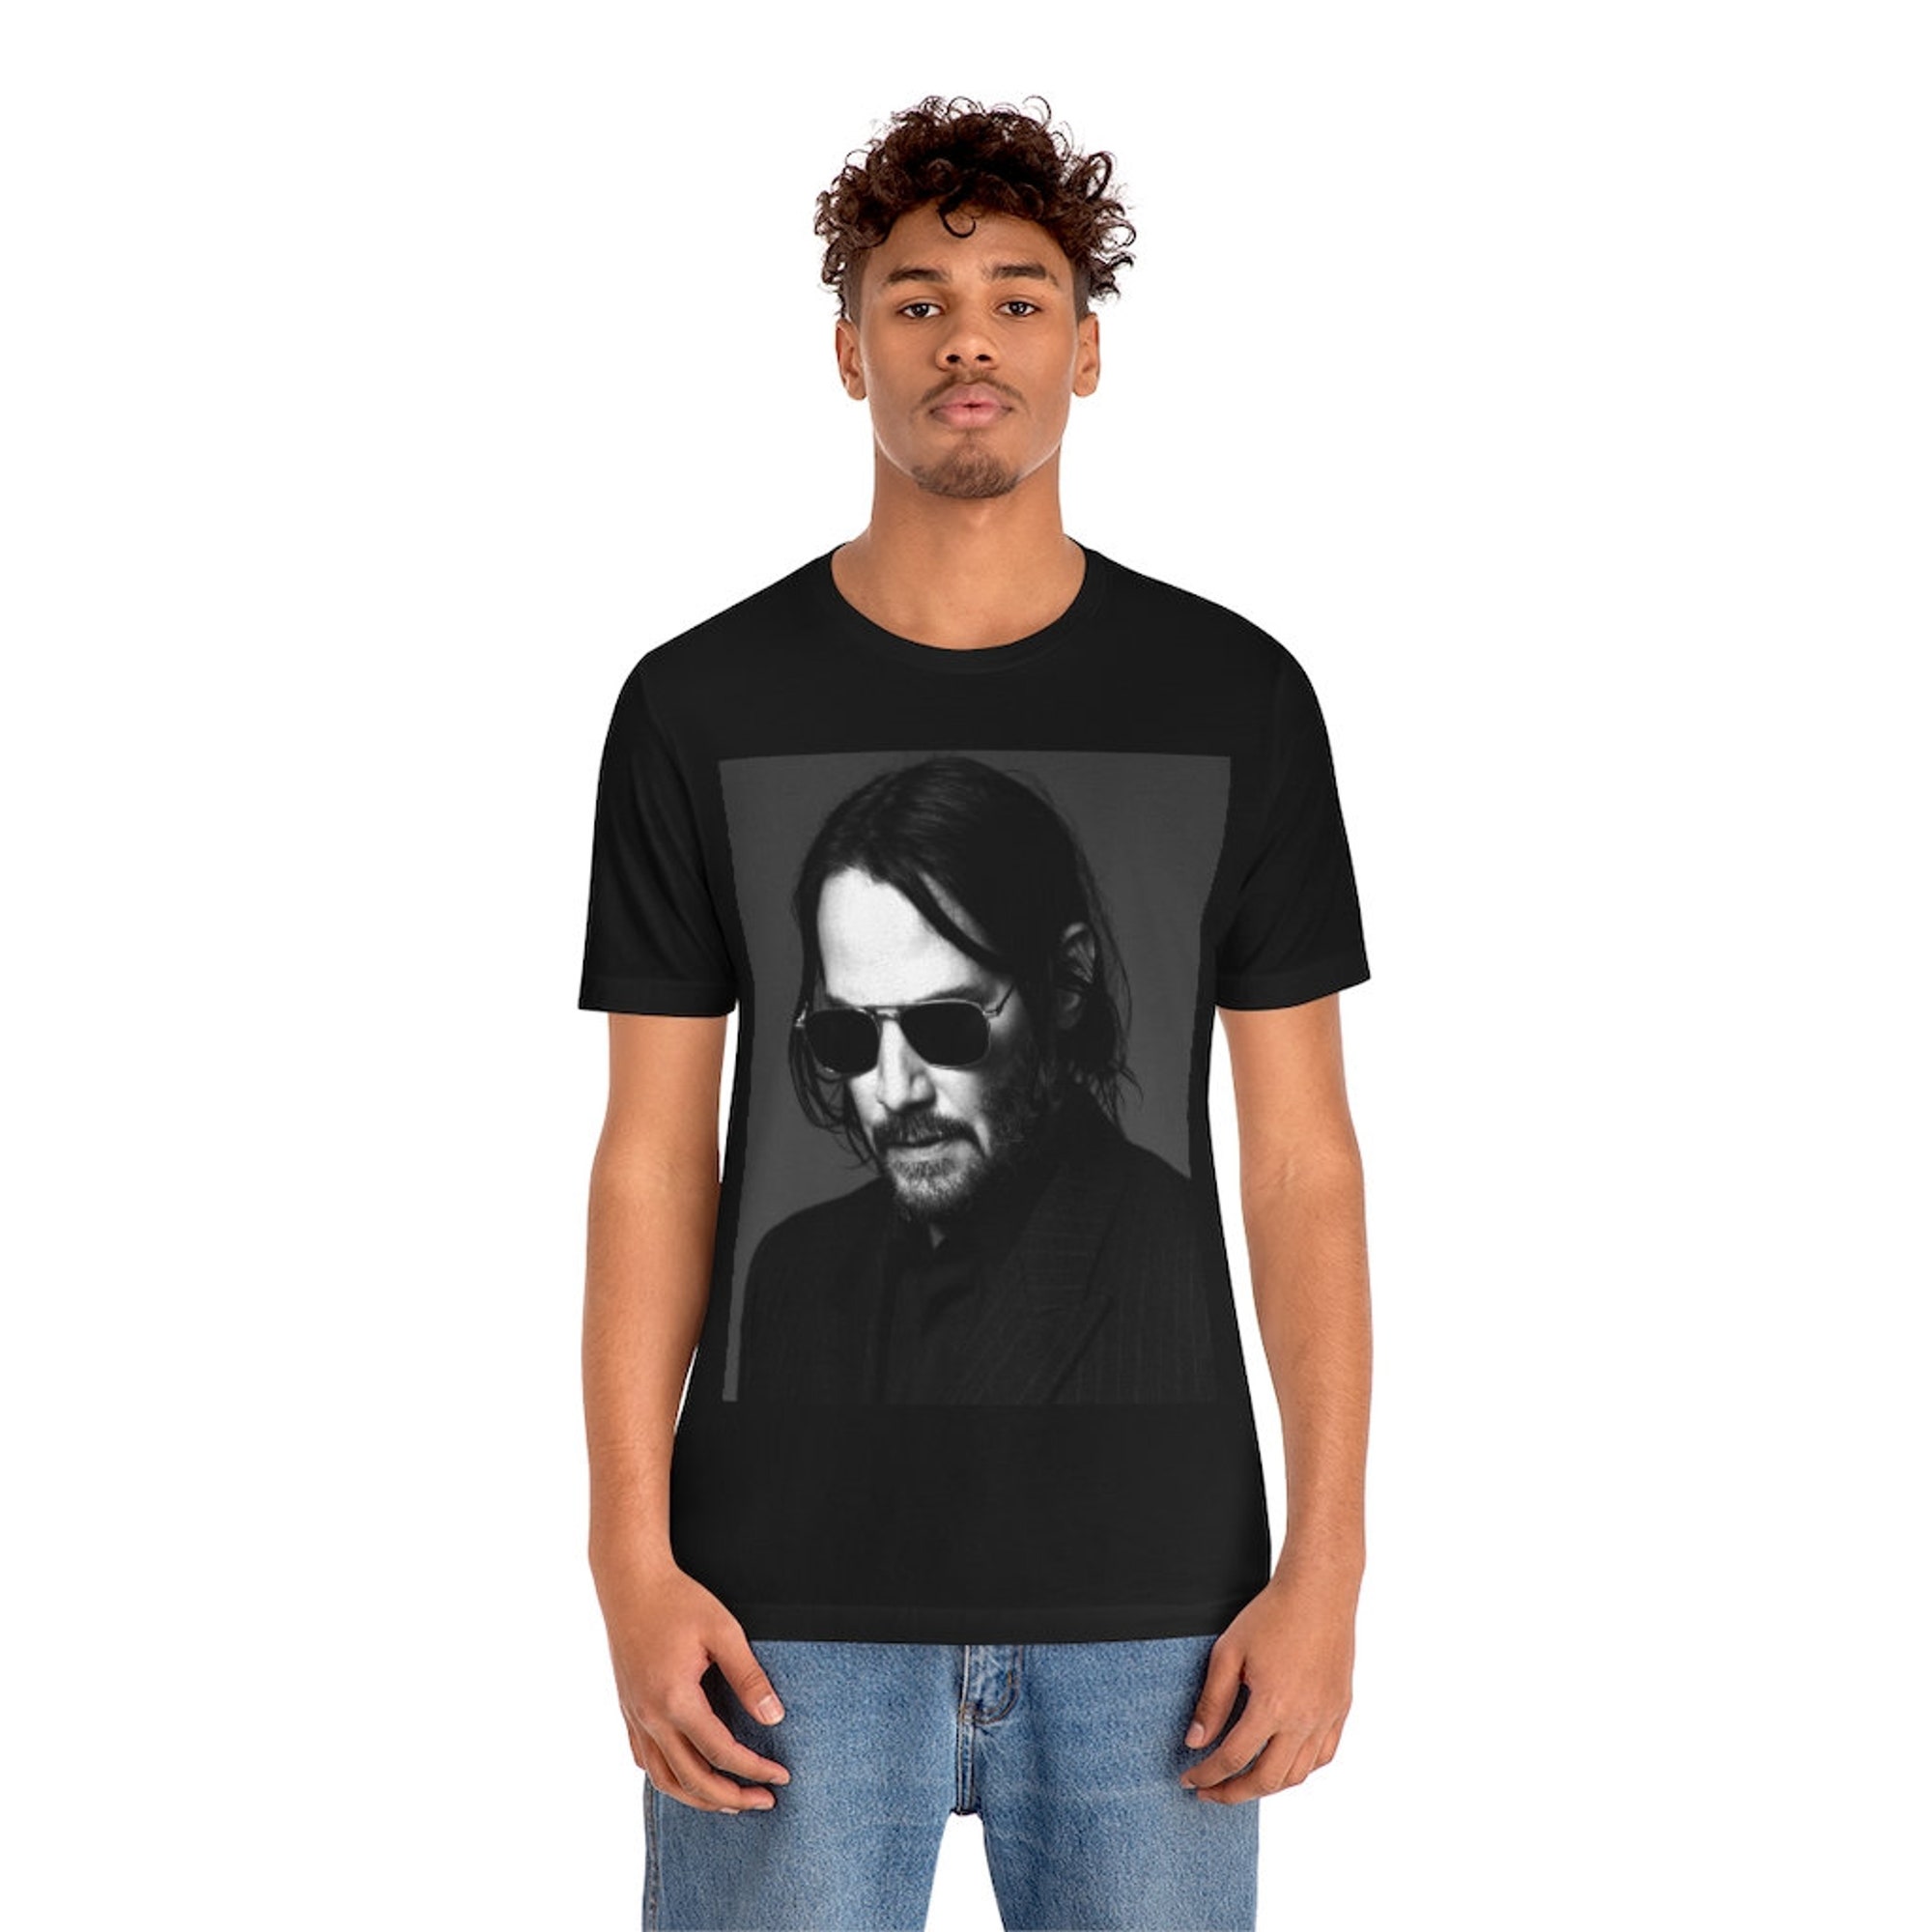 Keanu Reeves T-Shirt / Aesthetic Premium Unisex Crew Neck T-Shirt / Aesthetic Clothing / Birthday Gift / Minimalist Style Tee